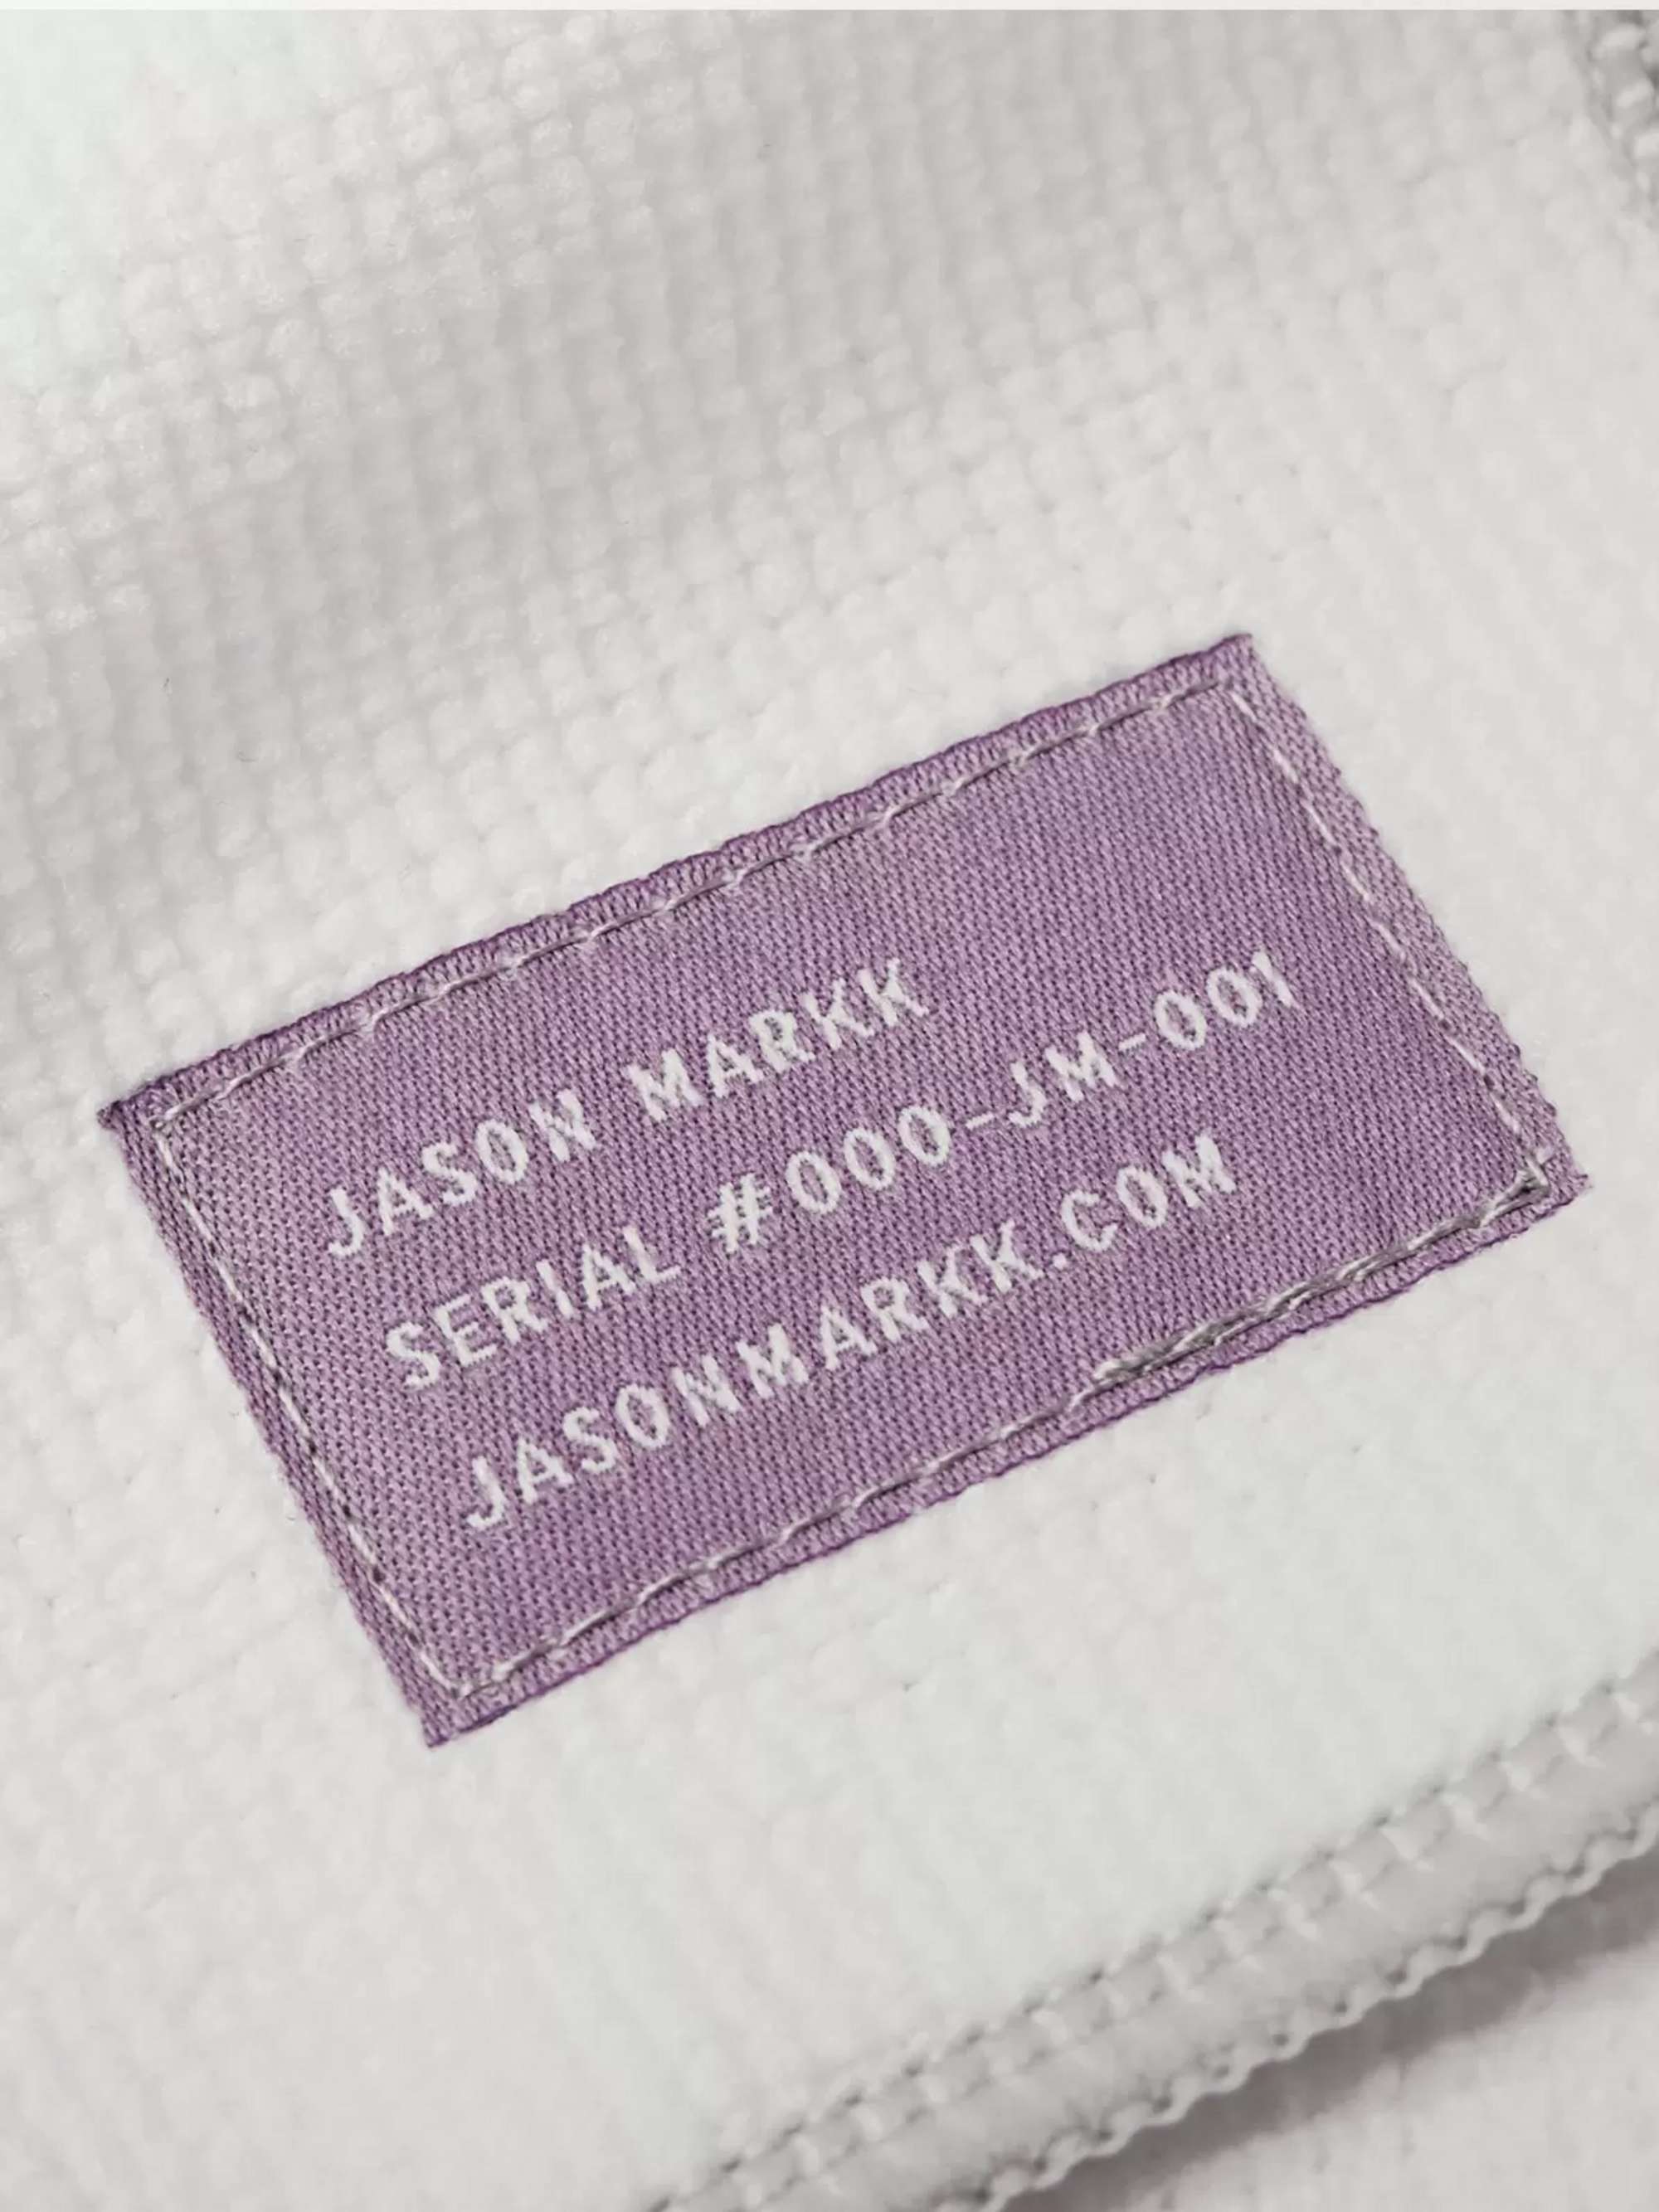 Jason Markk Premium Microfibre Towel